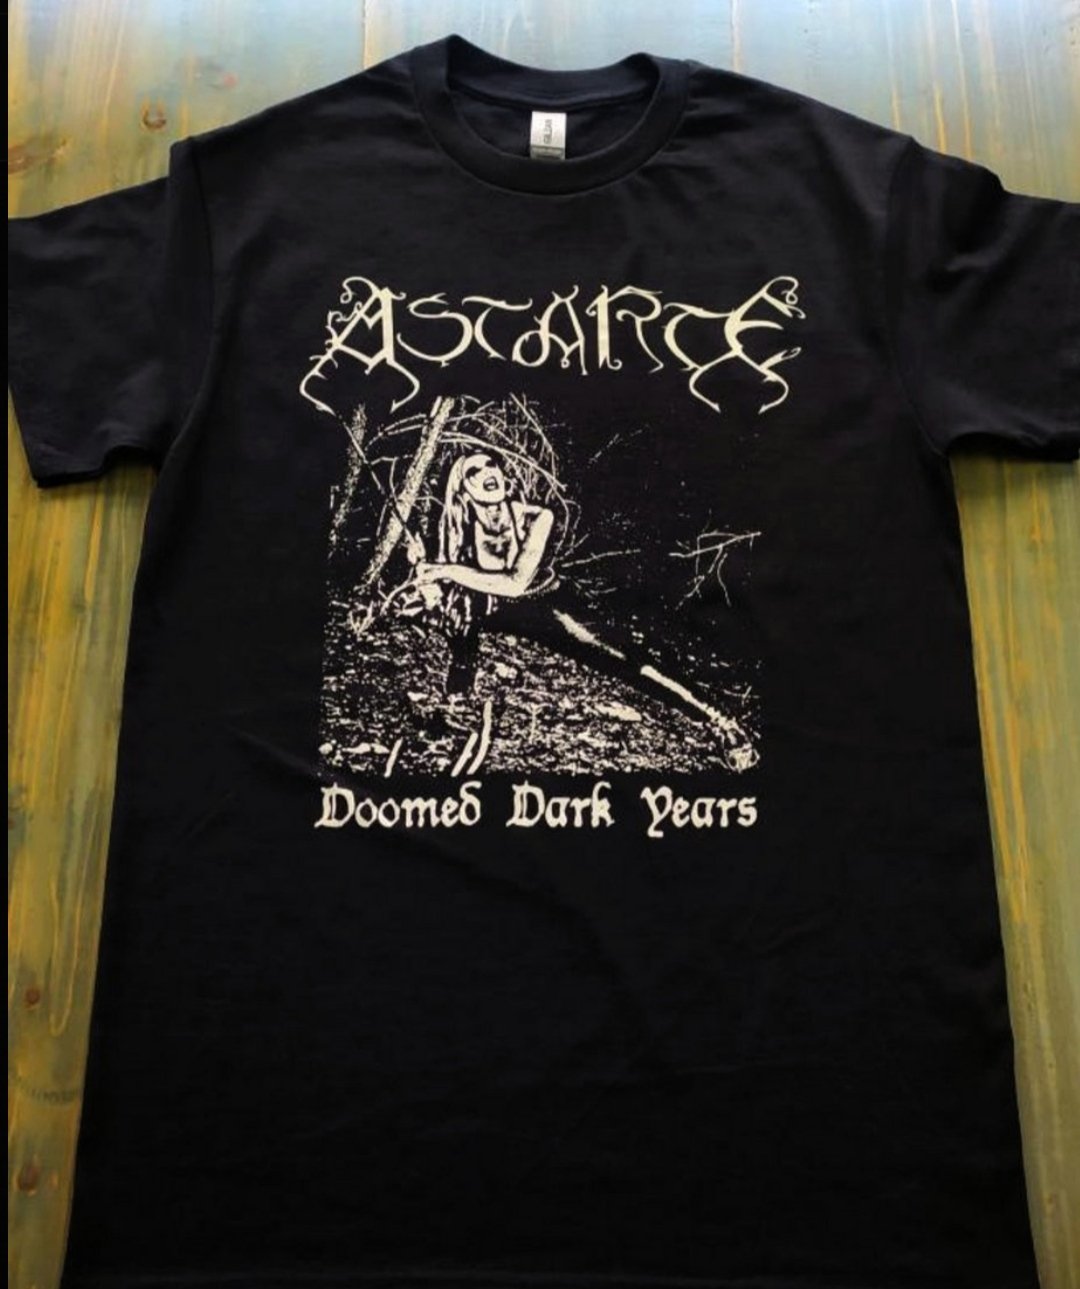 Astarte - Doomed Dark Years